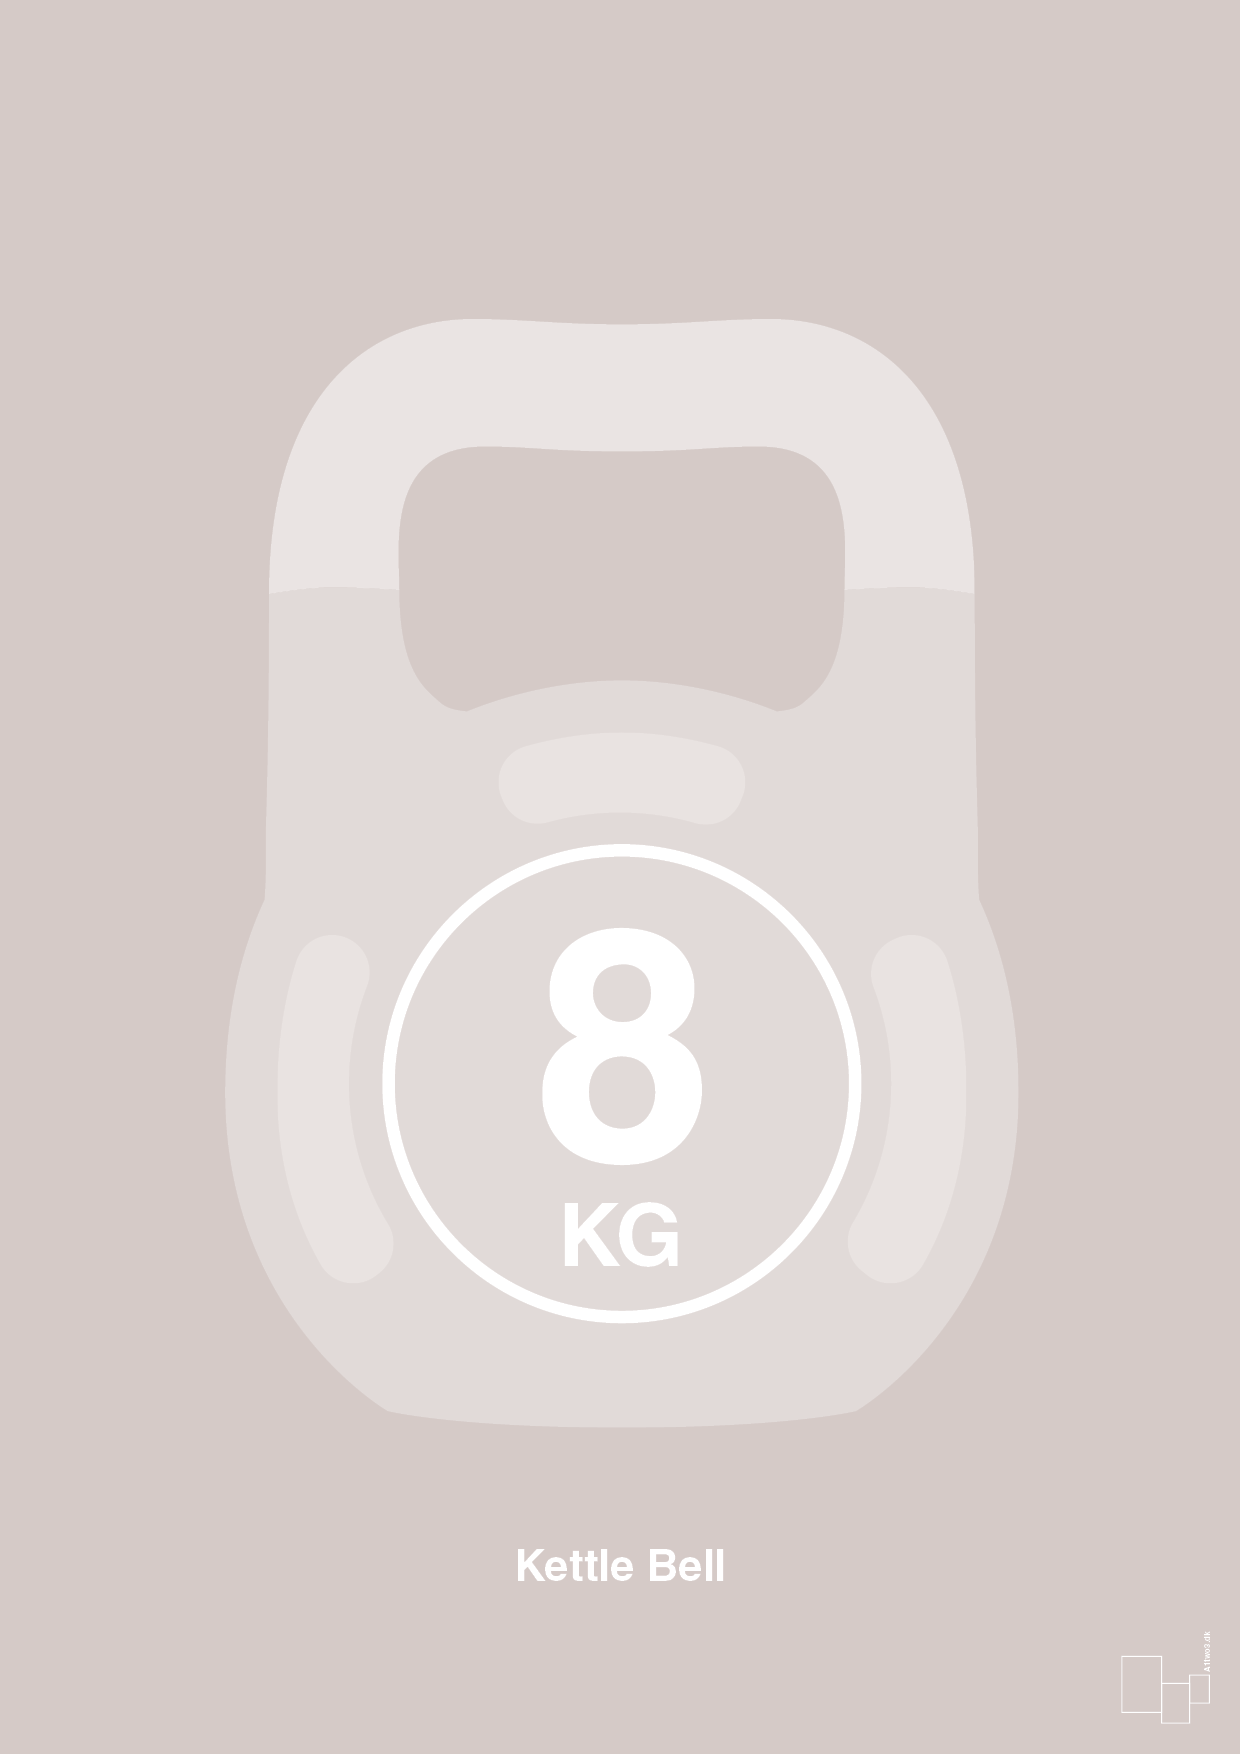 kettle bell 8 kg - Plakat med Grafik i Broken Beige